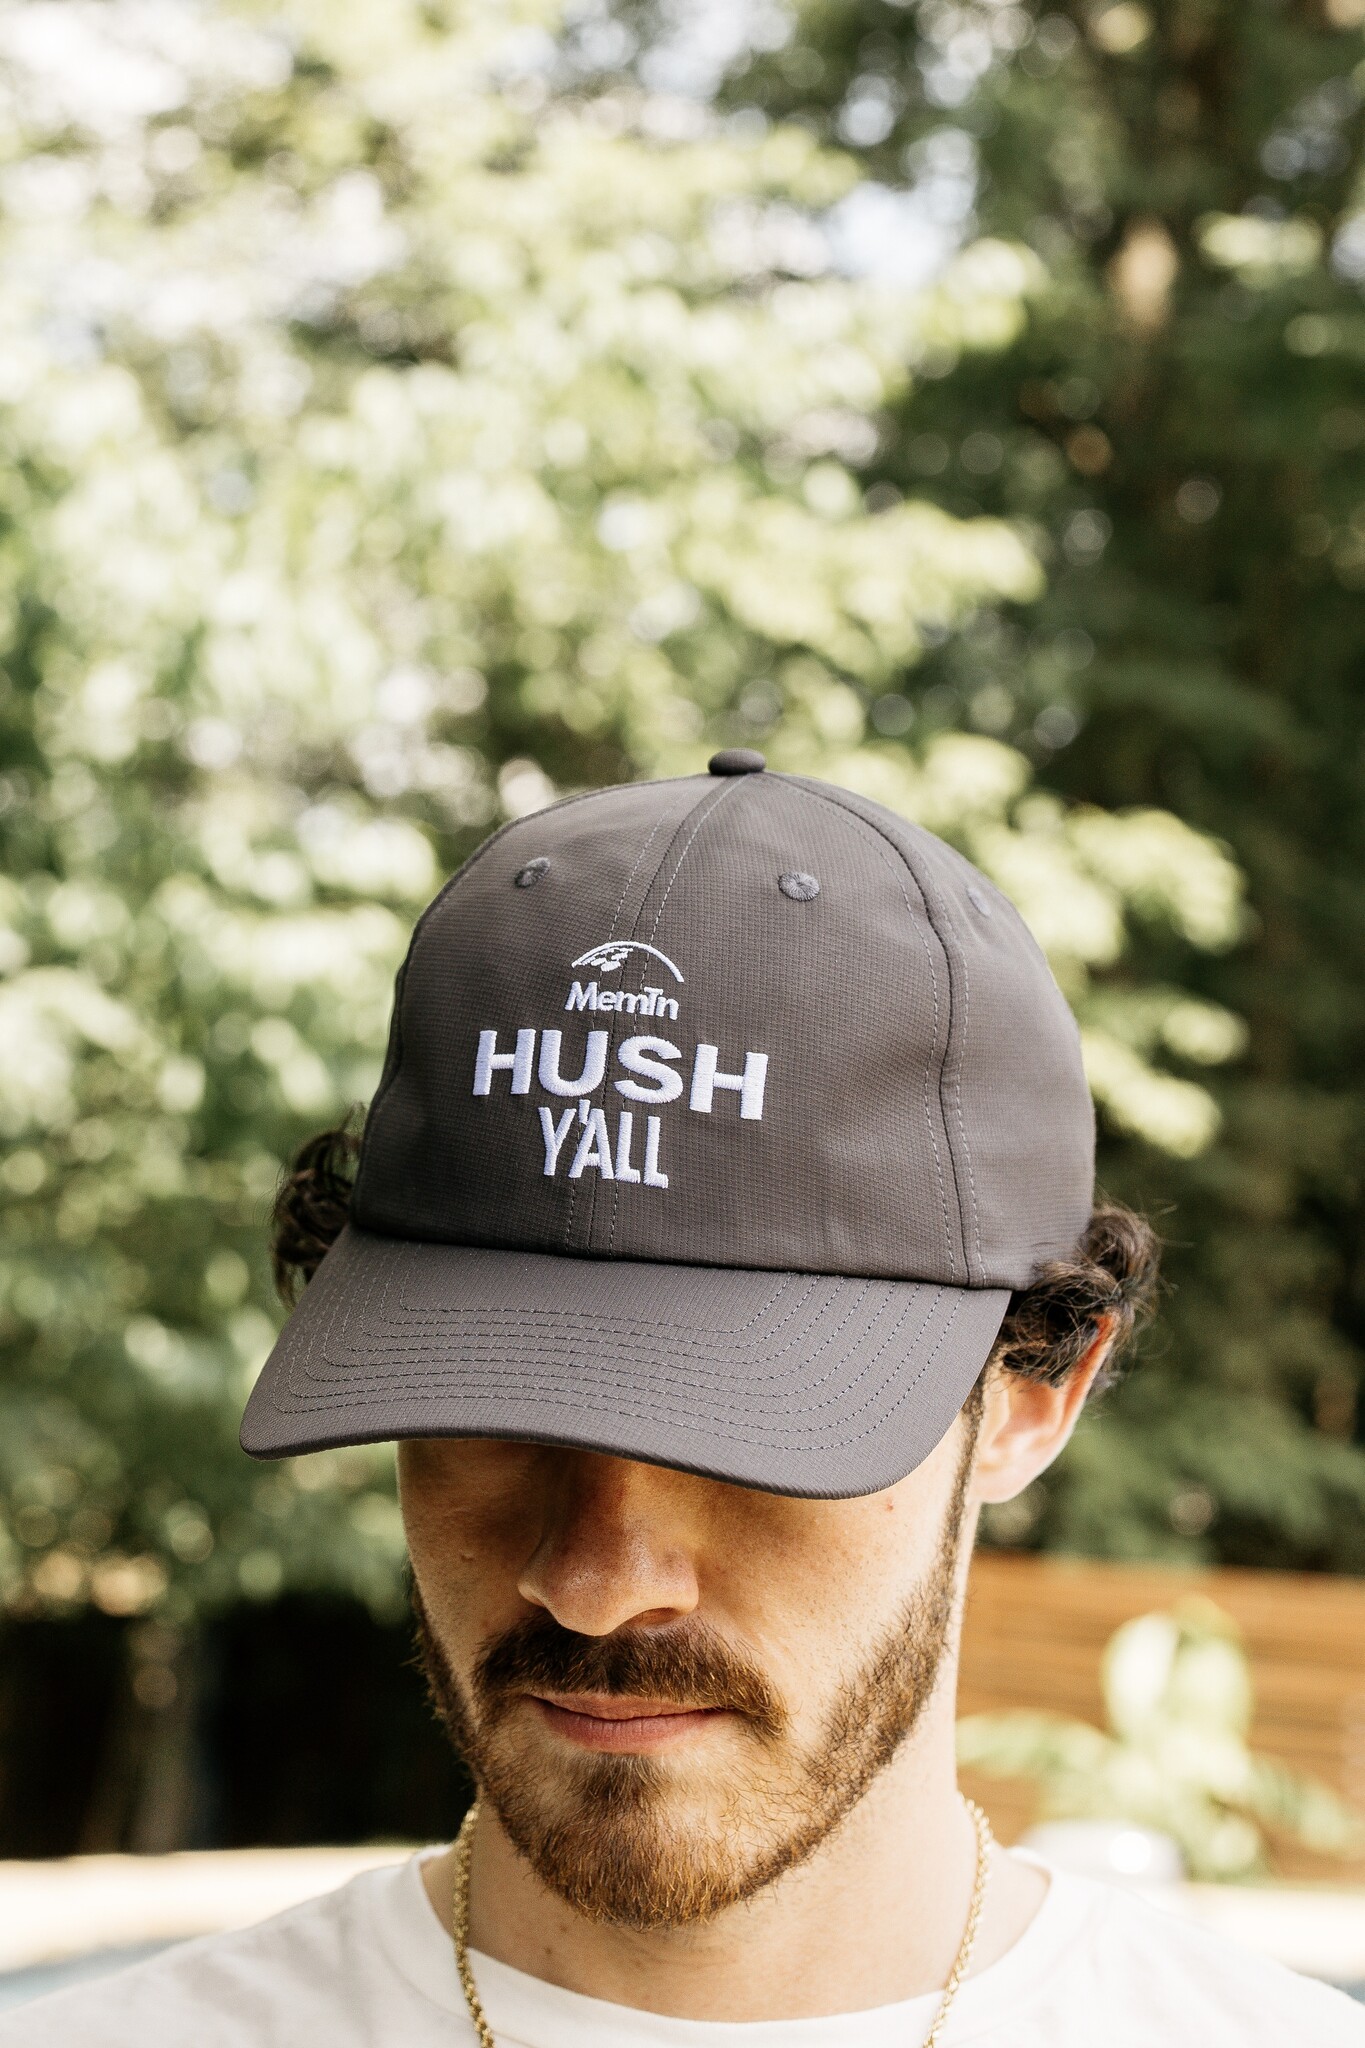 Hush Y'all Performance Cap